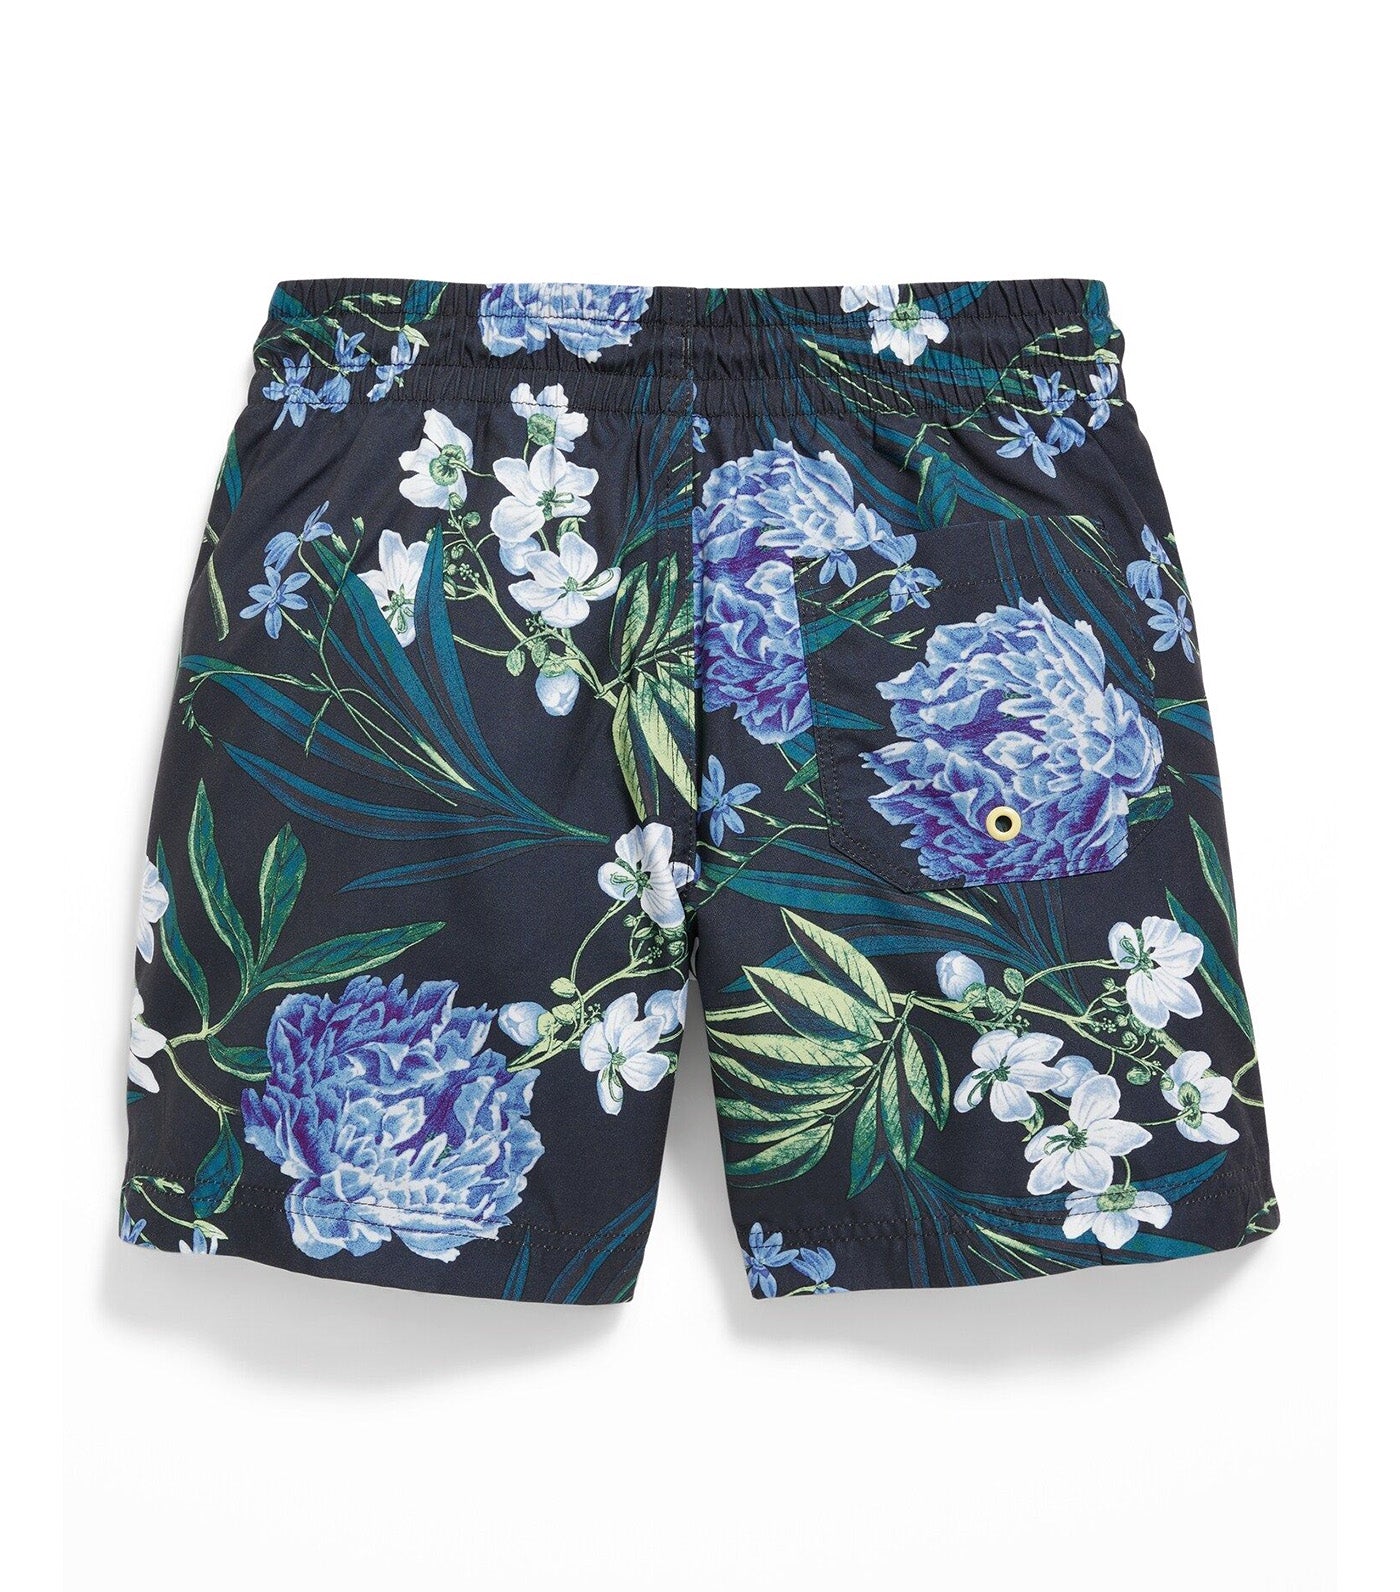 Printed Swim Trunks for Boys - Floral Pattern